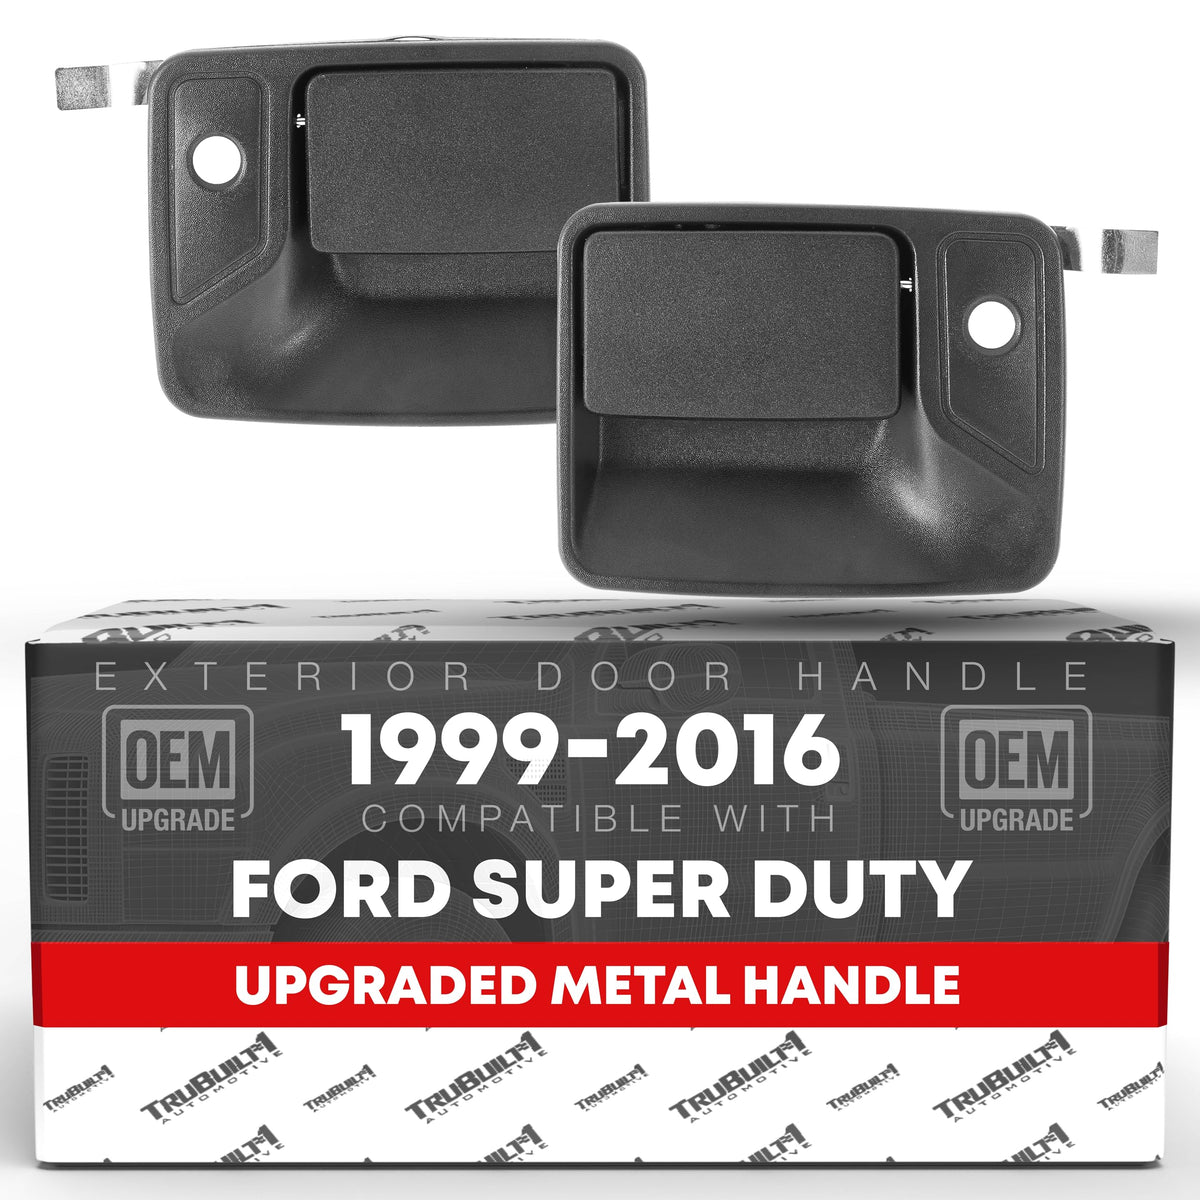 TRUBUILT1 AUTOMOTIVE Exterior Door Handle Set, Front Left & Right - Compatible with 1999-2016 Ford Super Duty, F-Series - Textured Black - Metal Handle - OEM 7C3Z-2522405-Metal, 7C3Z-2522404-Metal